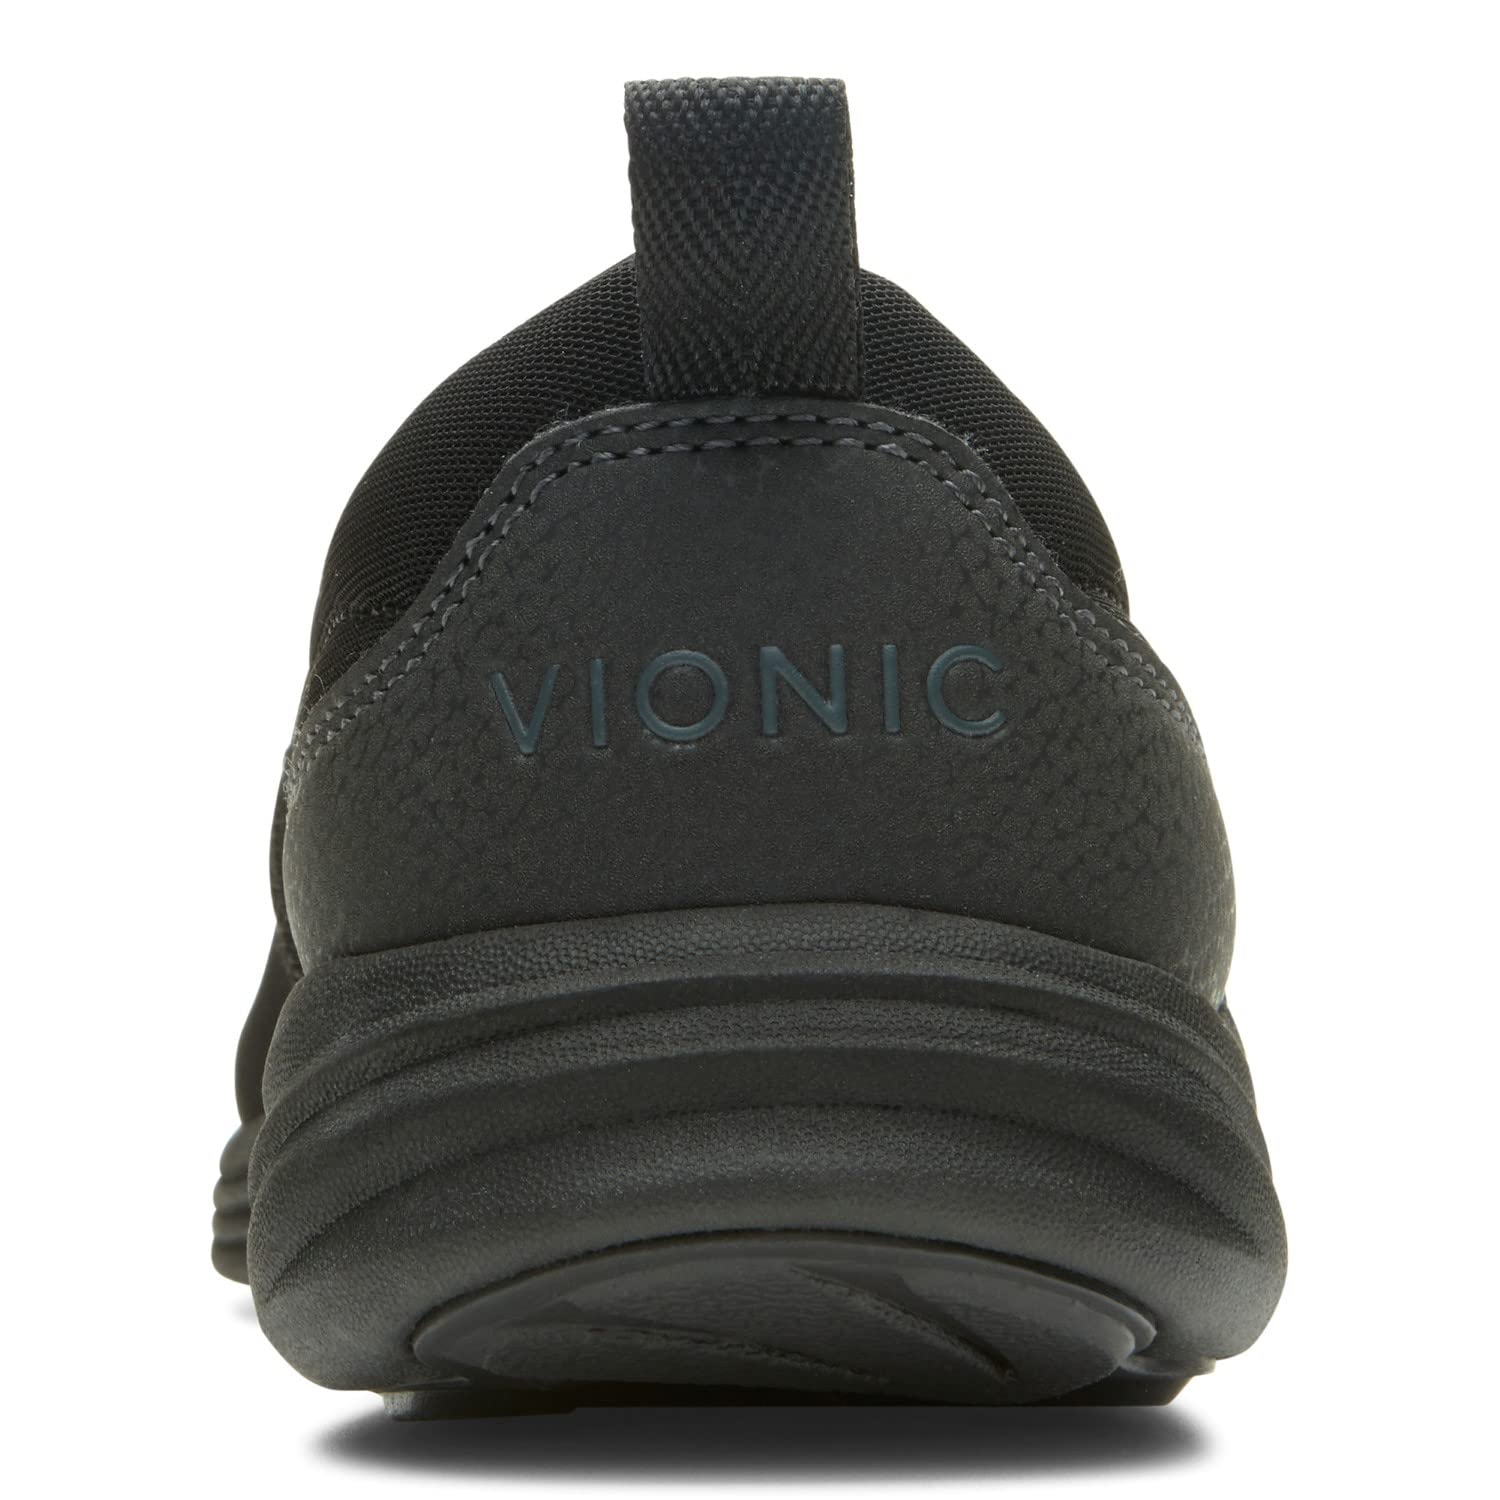 Vionic Women's Agile Kea Slip-on Black Black 9M US